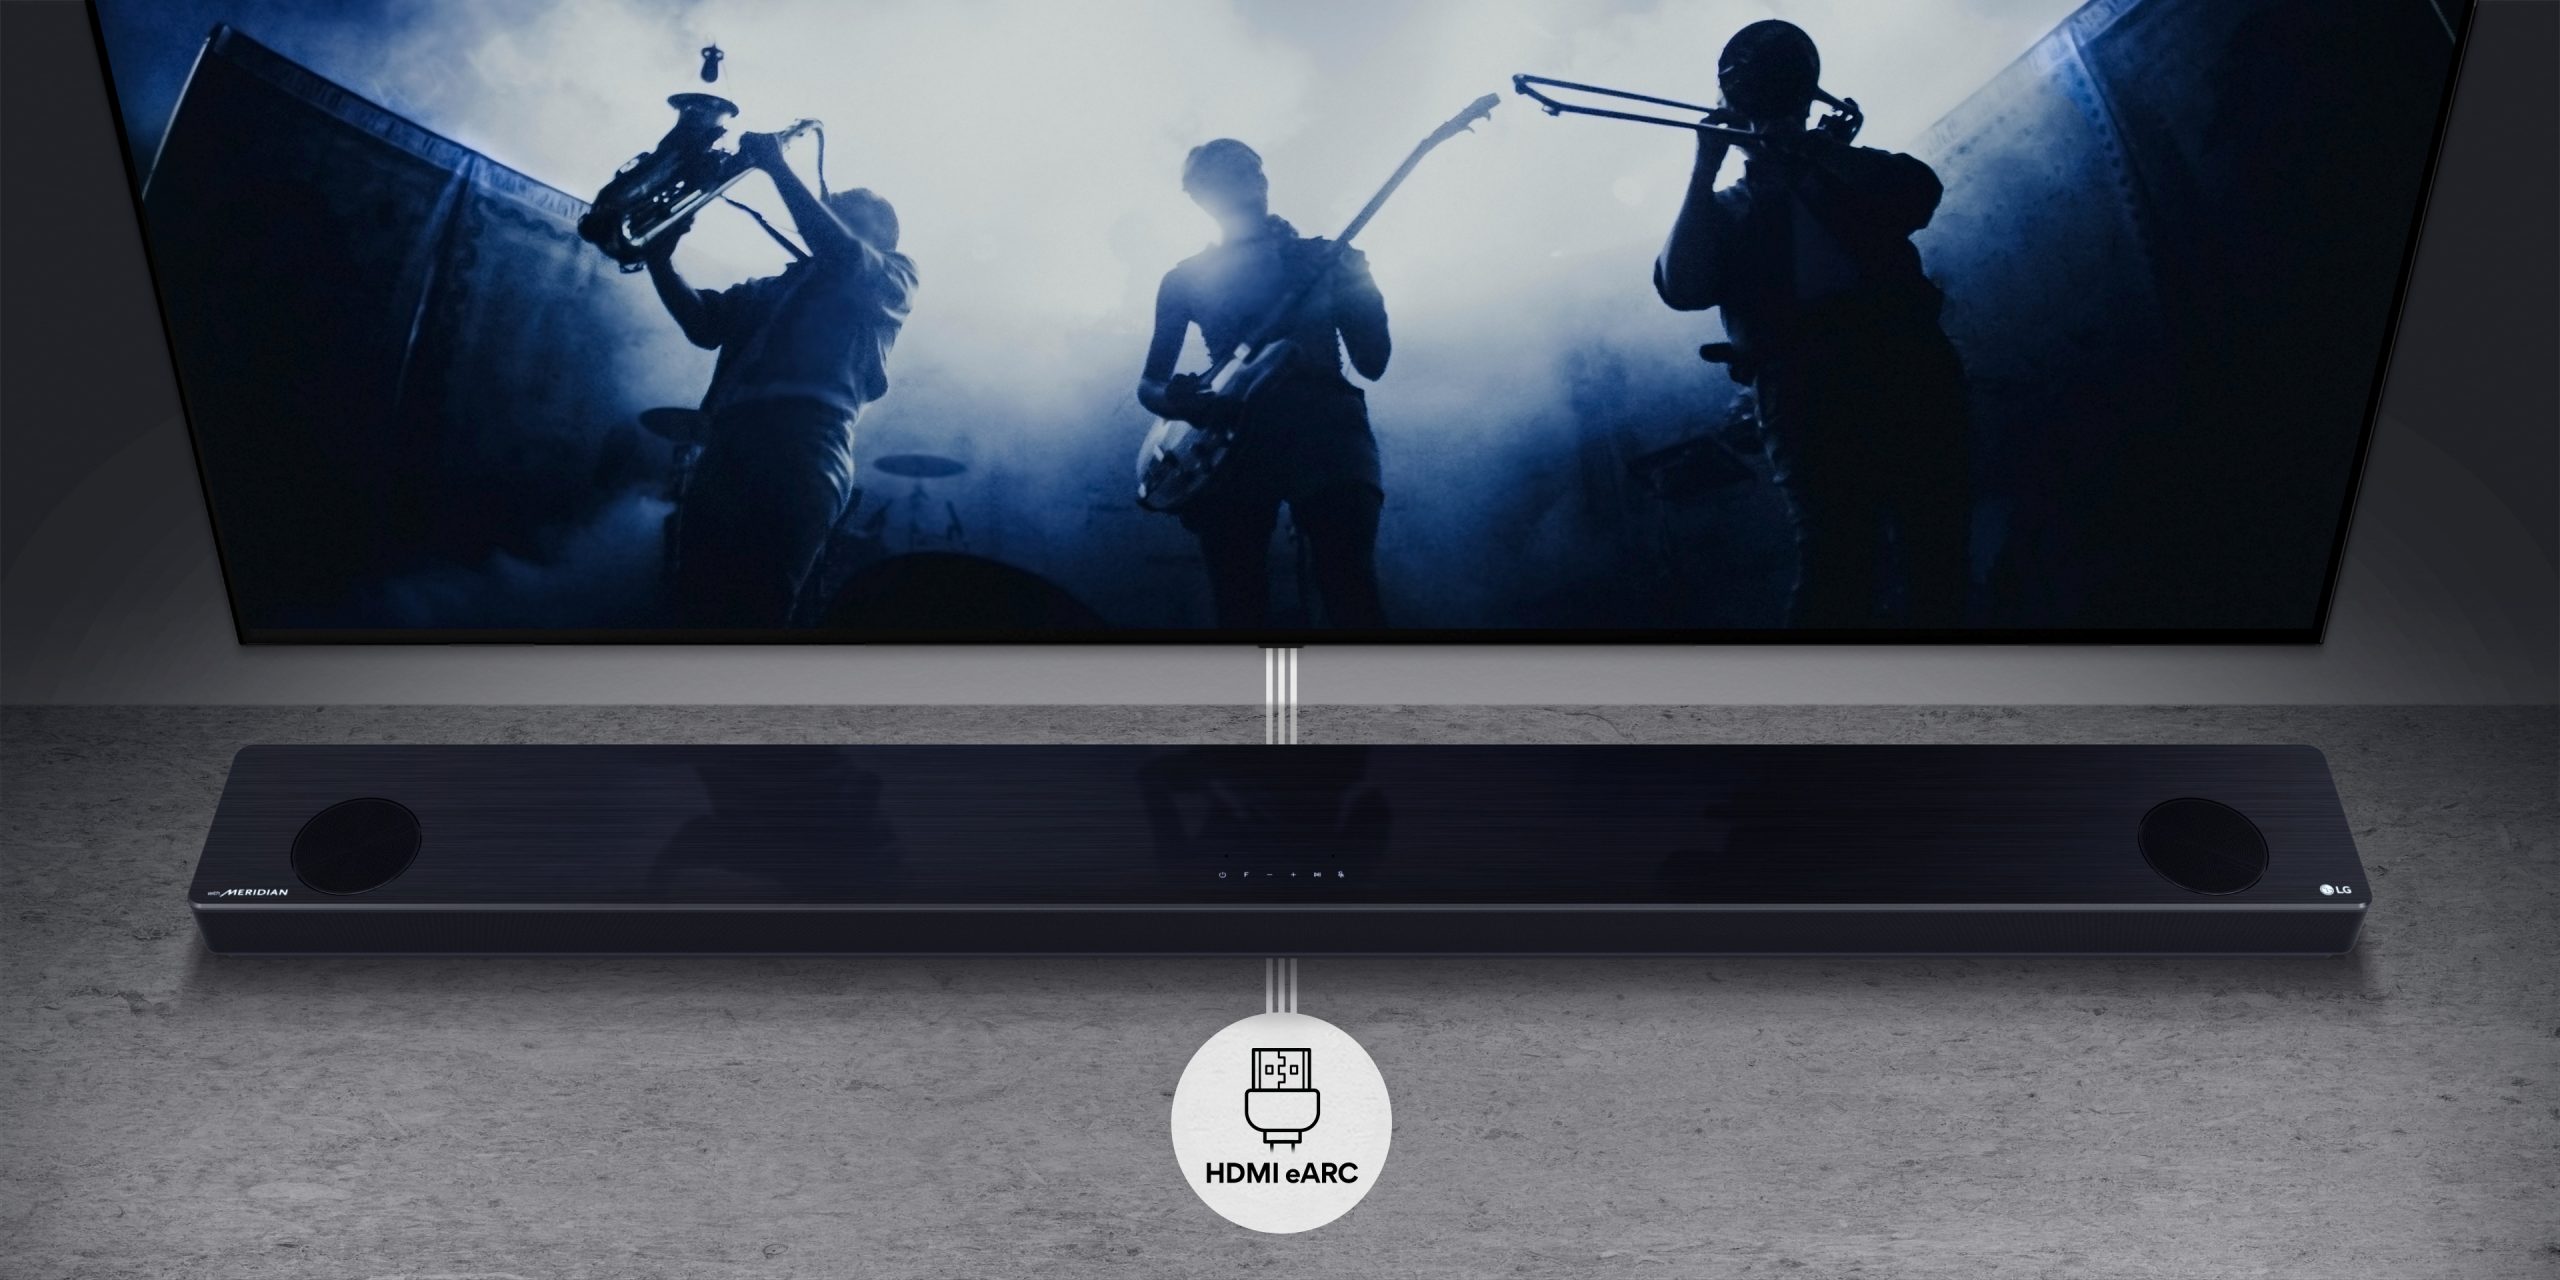 LG Soundbar Features 01 scaled